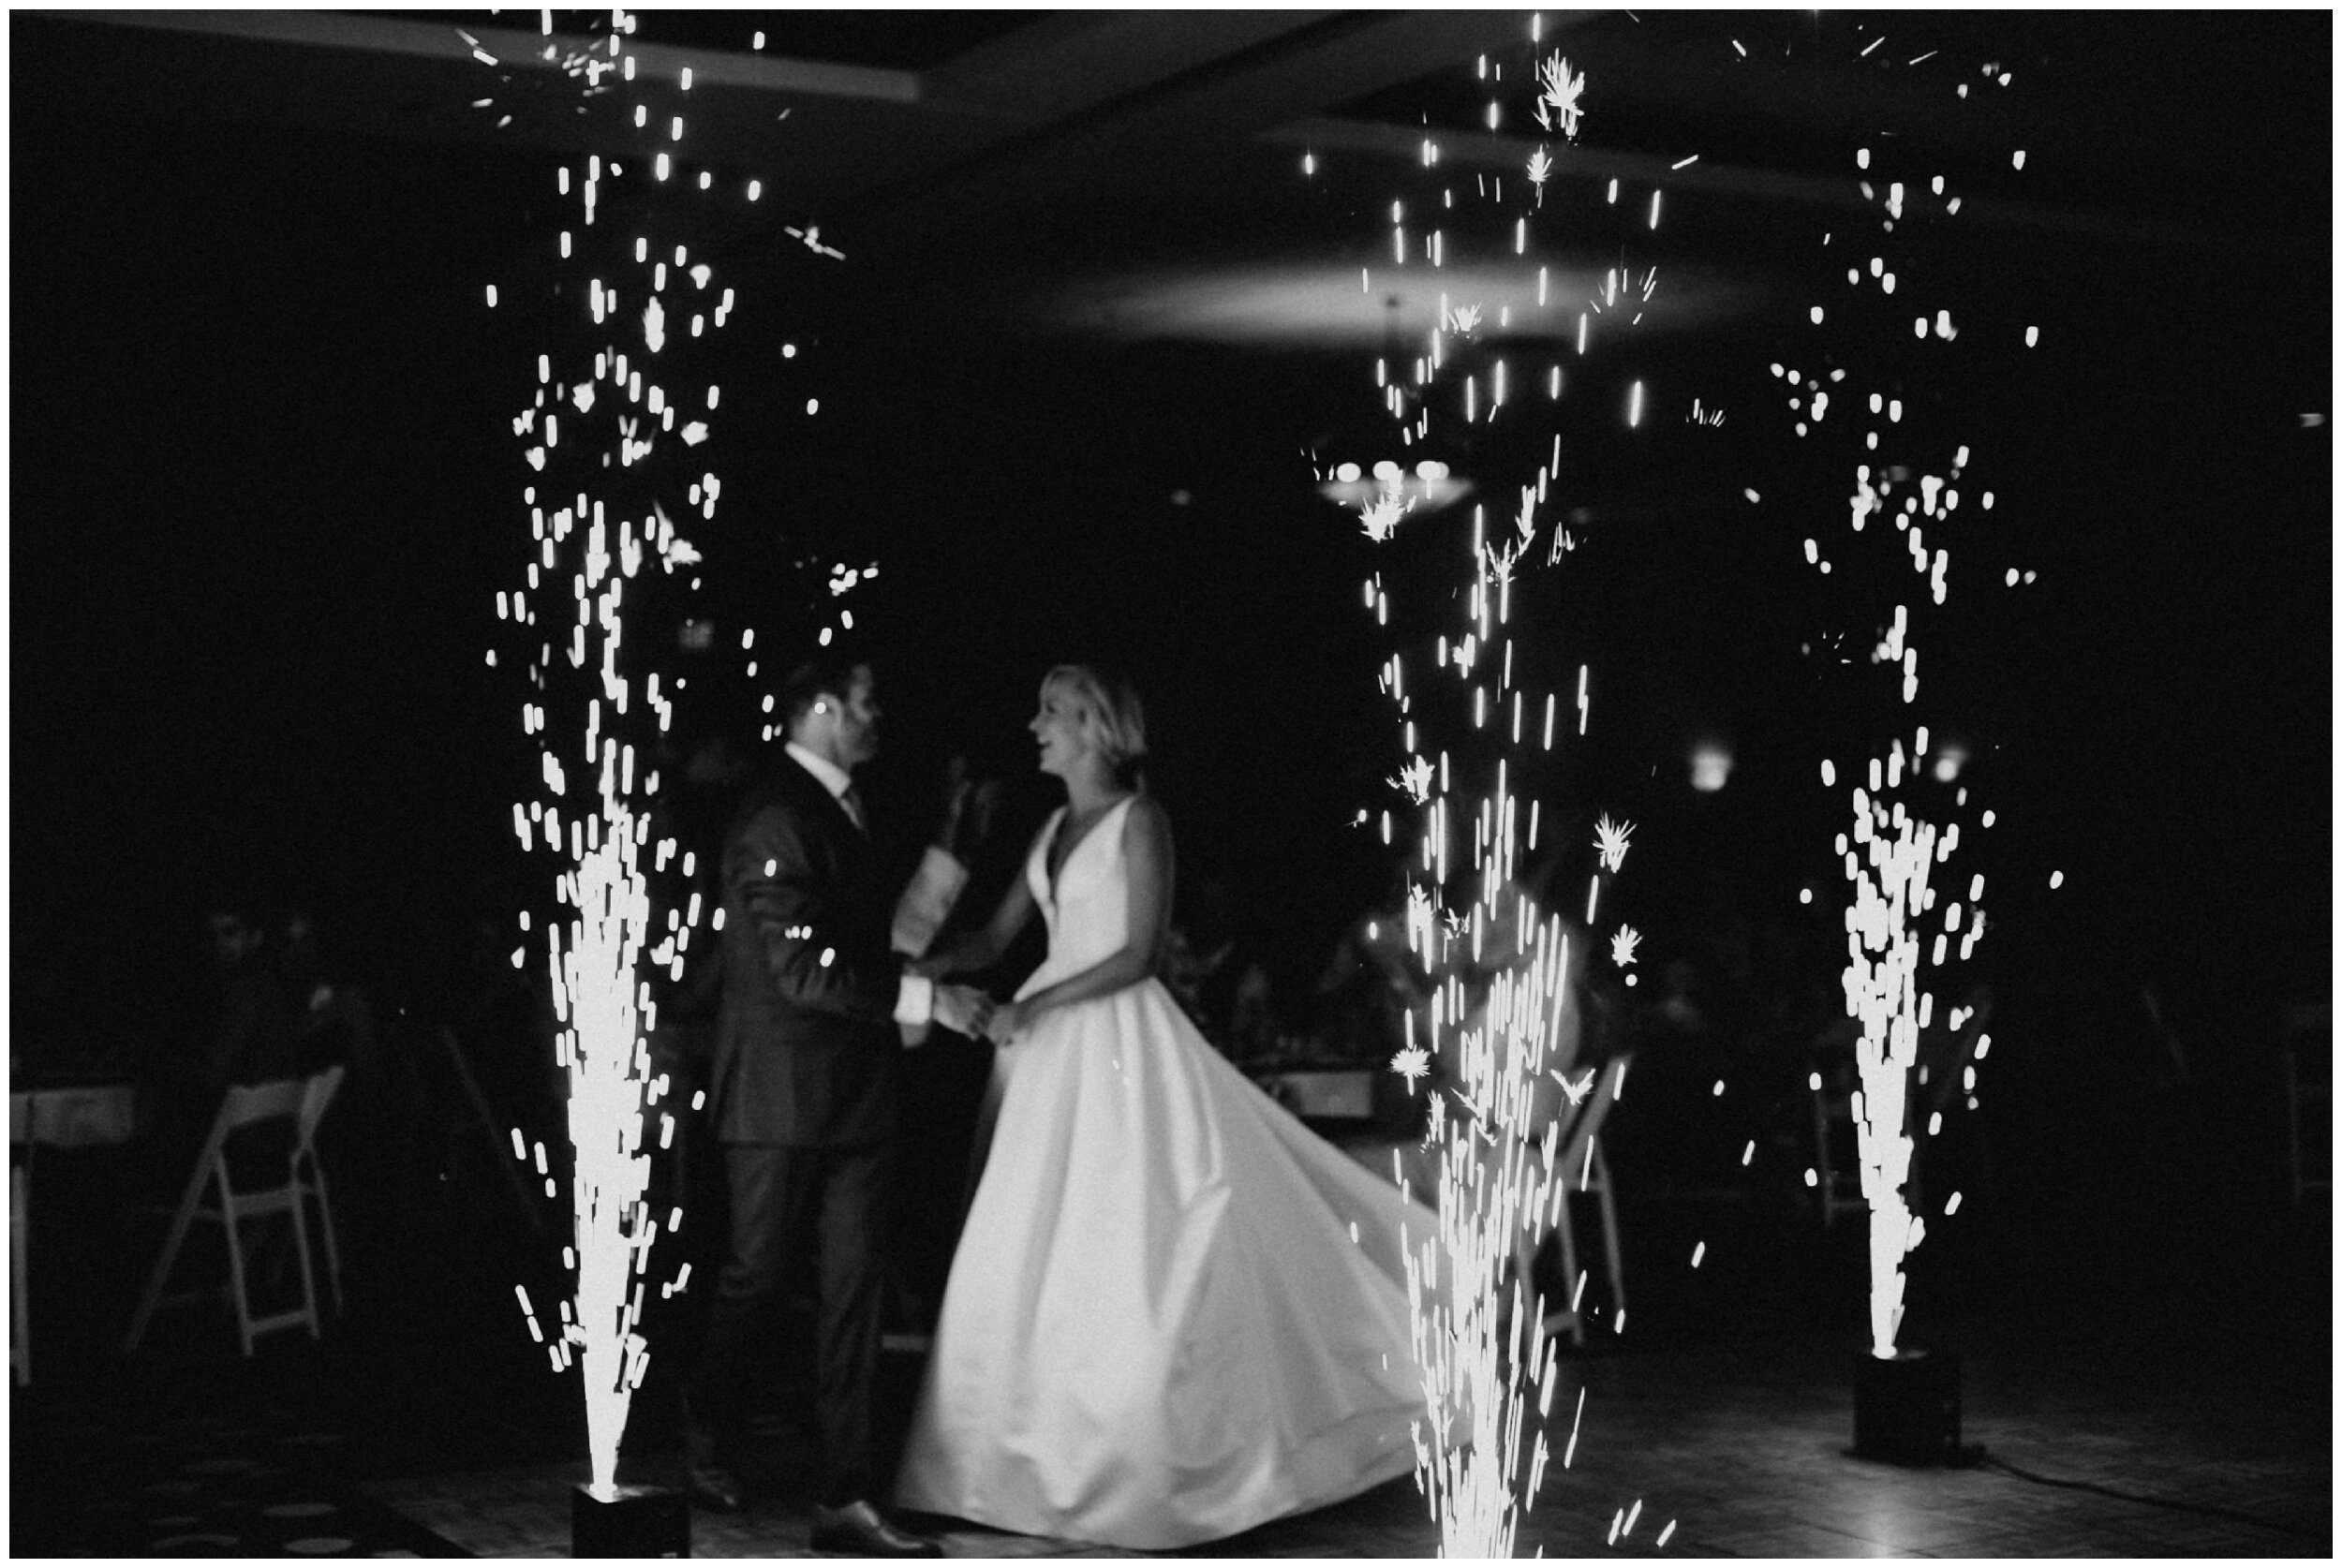 Sparkler wedding reception entrance at Grand View Lodge in Nisswa, Minnesota